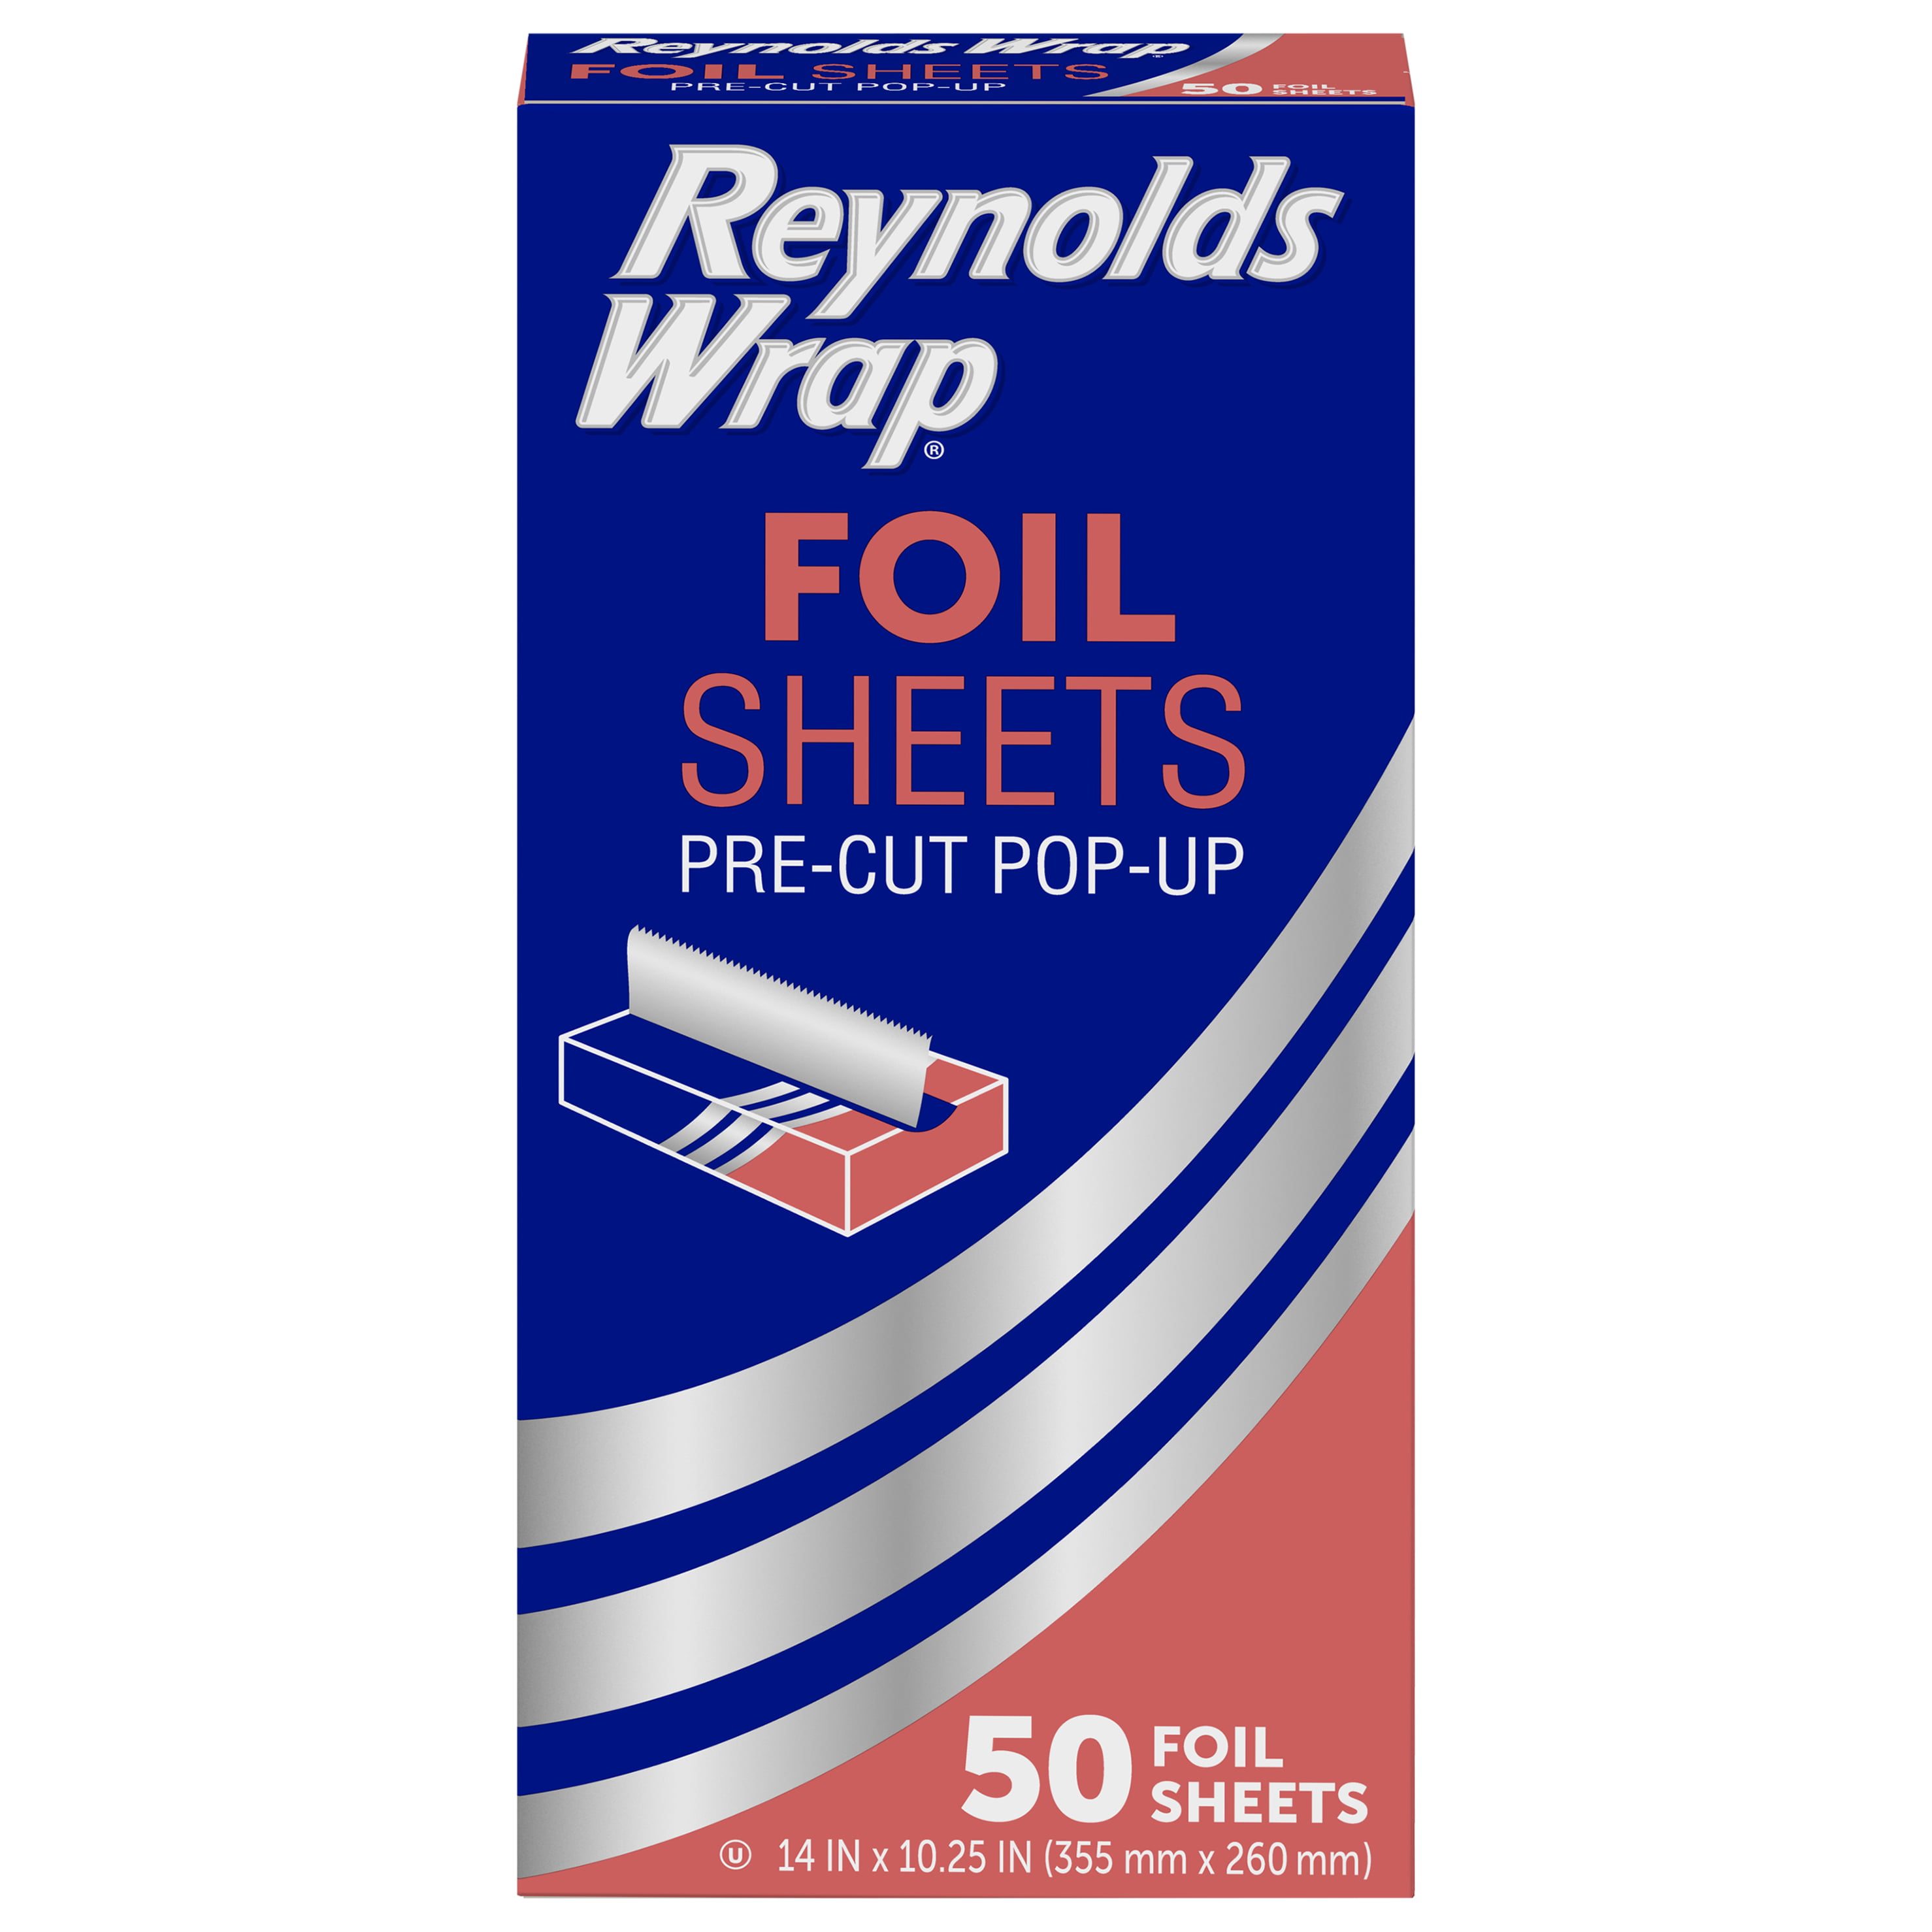 Reynolds Wrap Wrappers Foil Sheets Pre Cut Pop Up 50 Count 14" x 10.25" 2x 25ct 